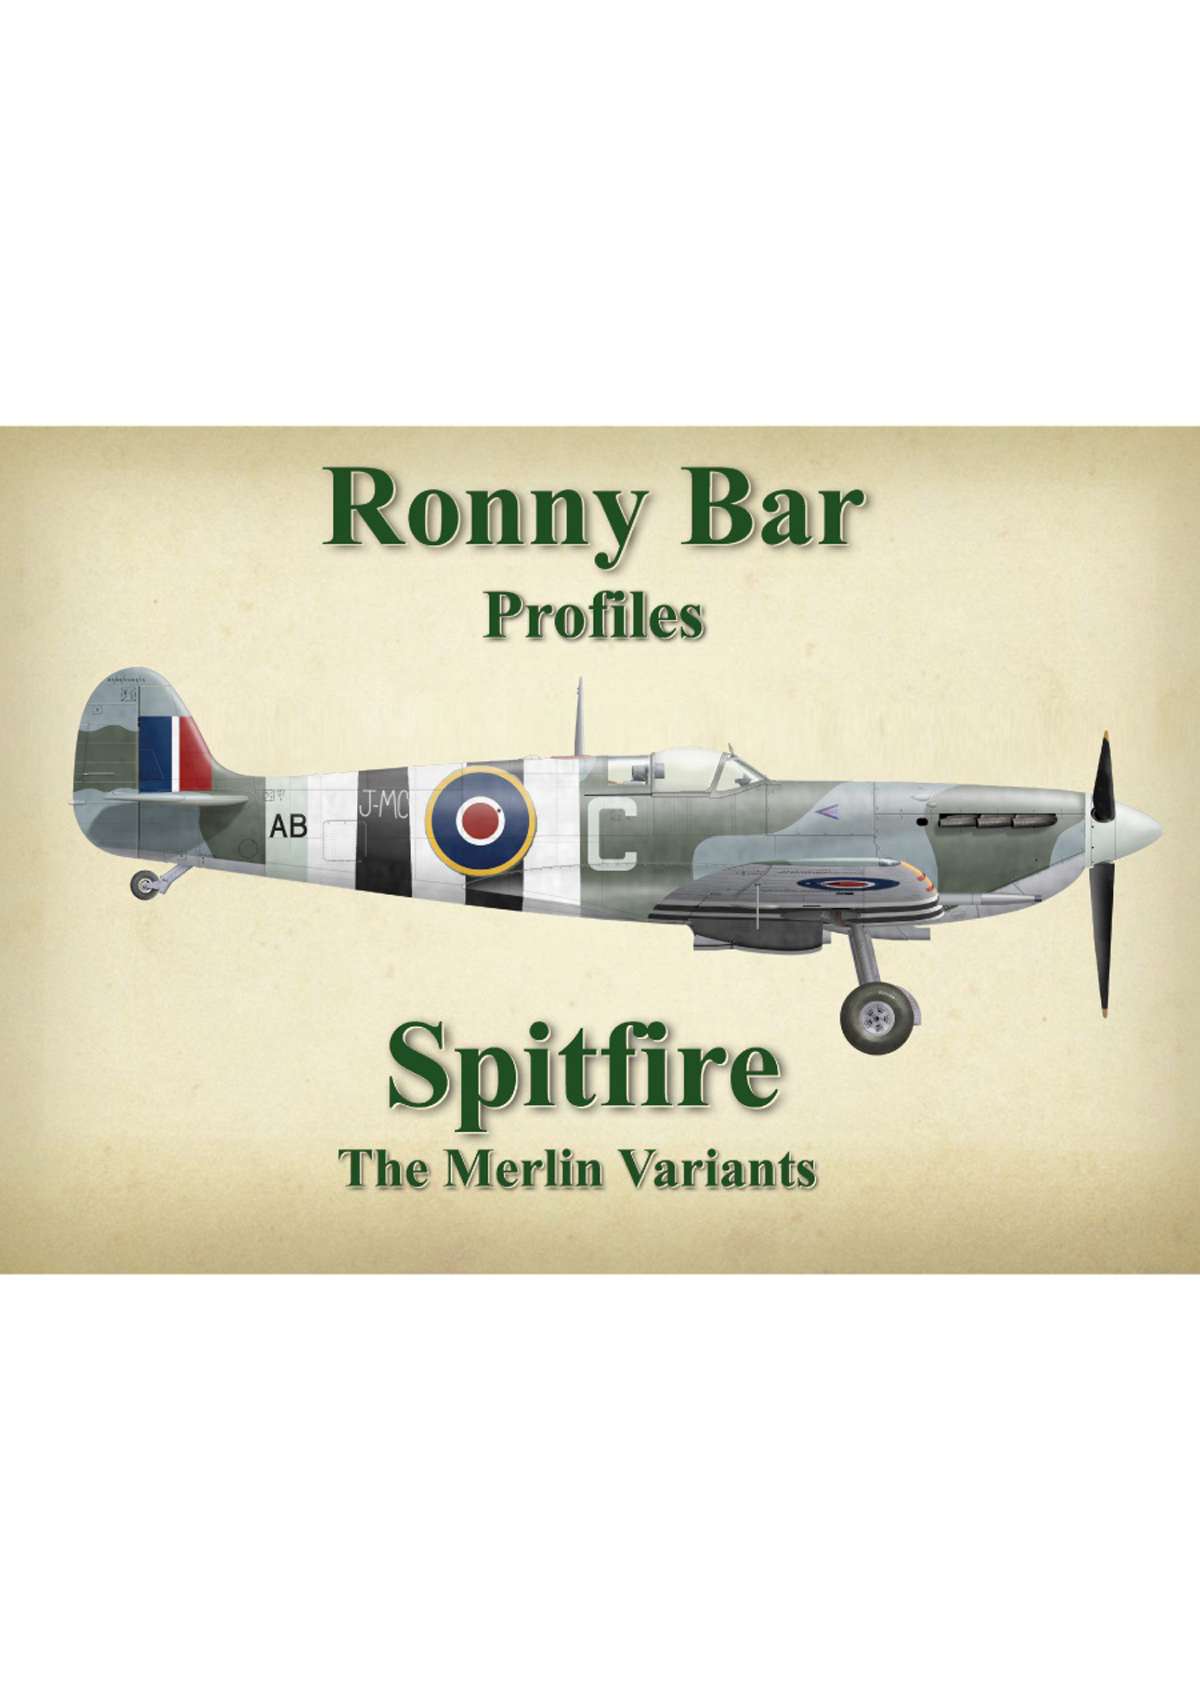 Ronny Bar Profiles - Spitfire - the Merlin Variants